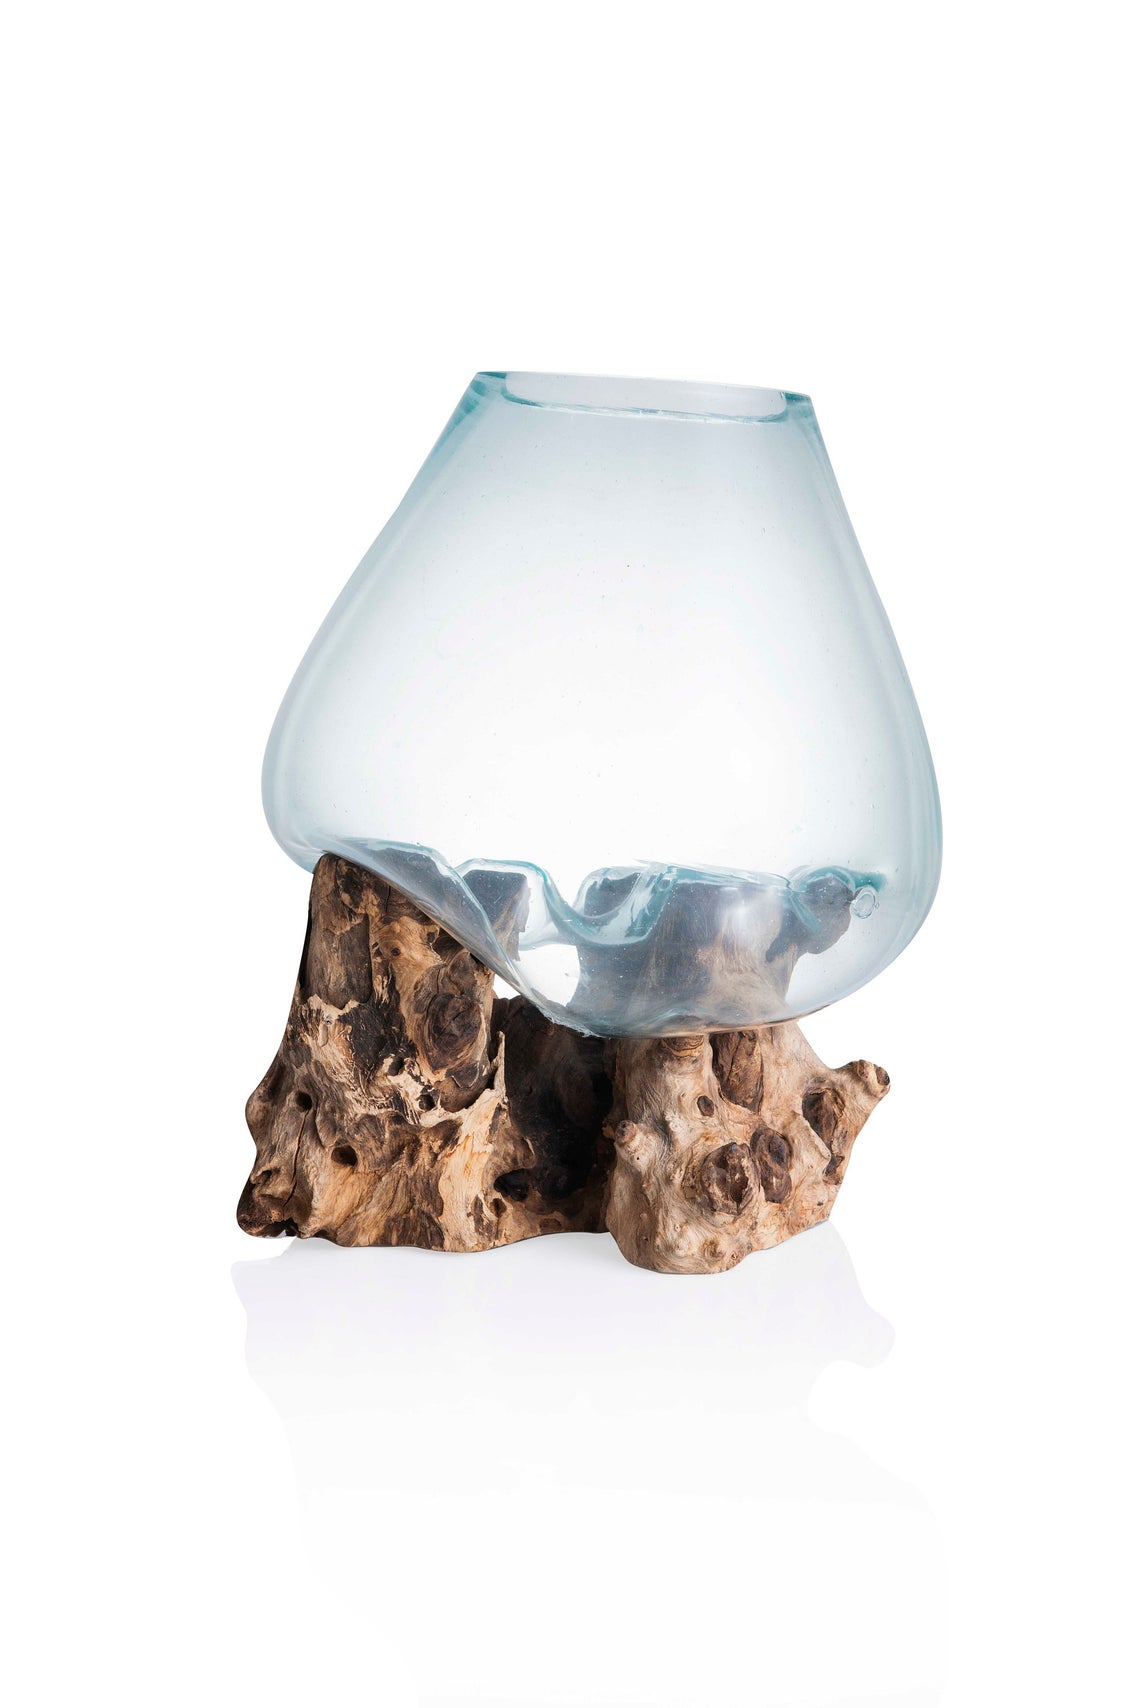 JIVA BOWLS - 30cm - Glass vase/ Terrarium / Fish tank/ Succulent holder / Air plant holder/ water plant holder / Center table accent piece. - Sculptree